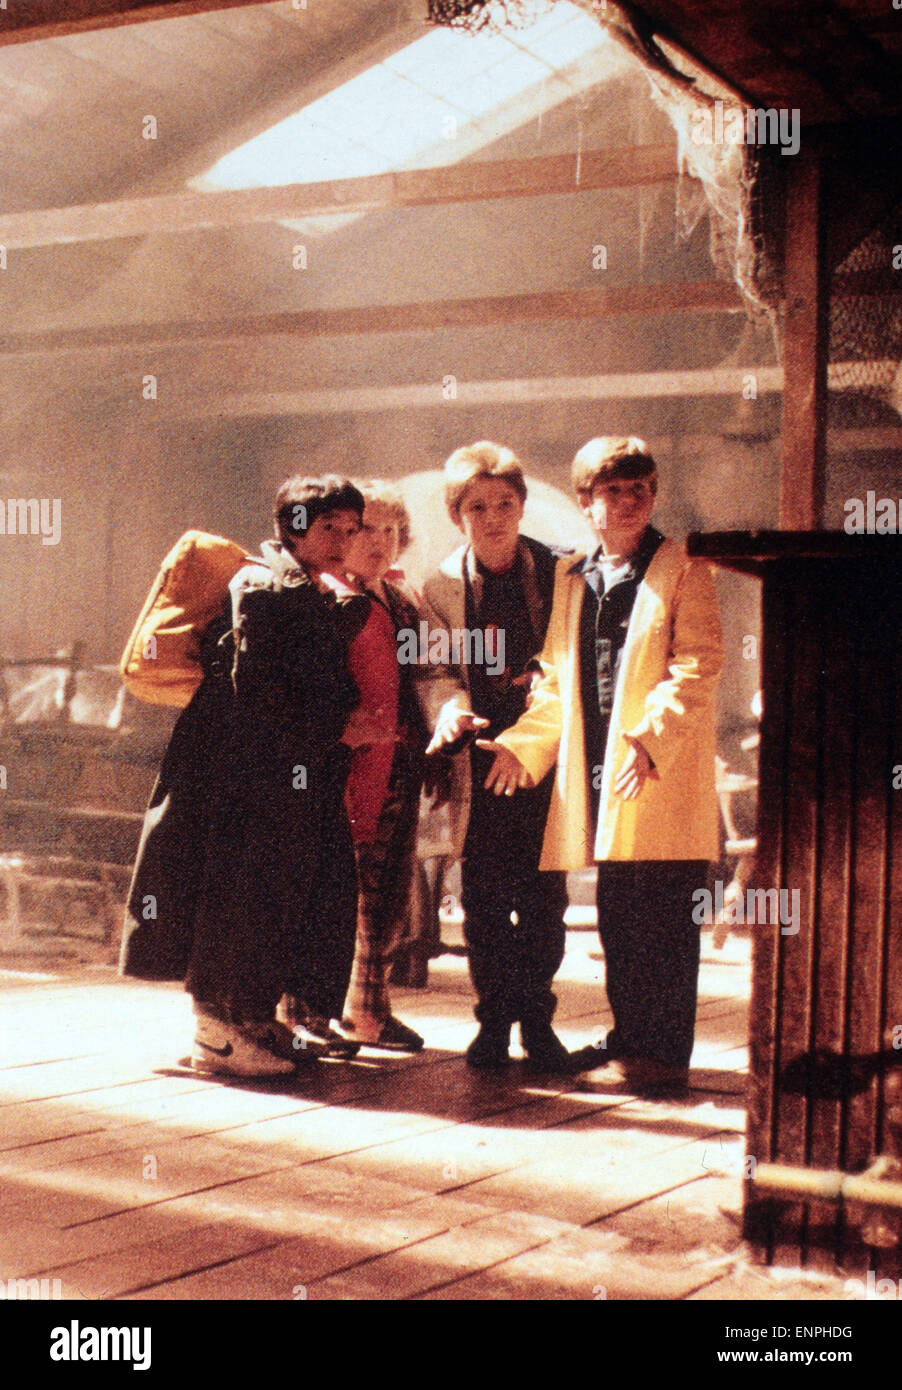 Die Goonies, aka: sterben Goonies, USA 1985, Regie: Richard Donner, Monia: Ke Huy Quan, Jeff Cohen, Corey Feldman, Sean Astin Stockfoto